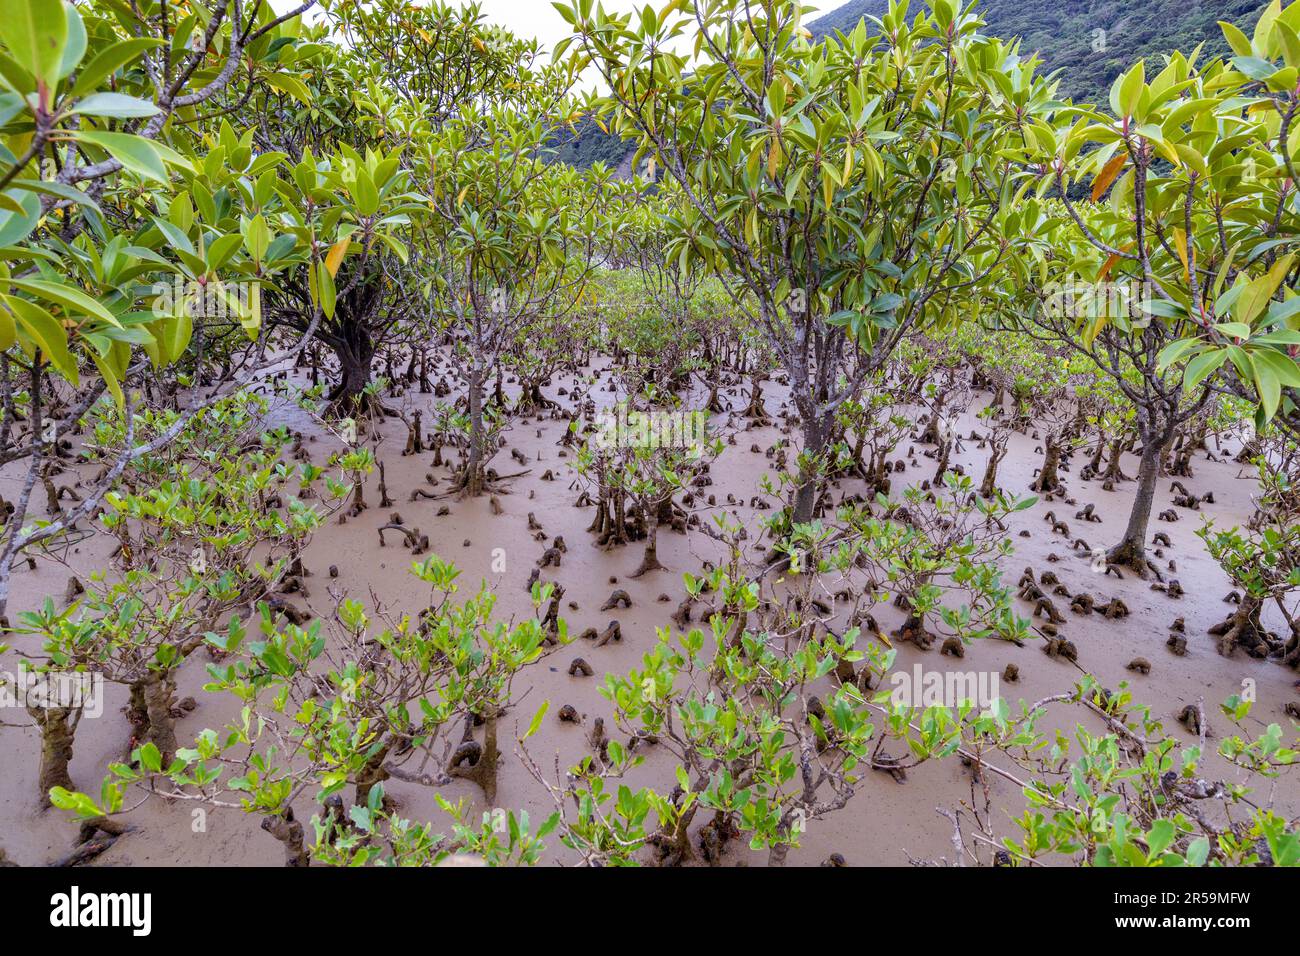 Dense mangrove vegetation with two species of mangrove (Kandelia obovata and Bruguiera gymnorhiza) at Mangrove Primeval Forest, Amami Oshima Island, s Stock Photo